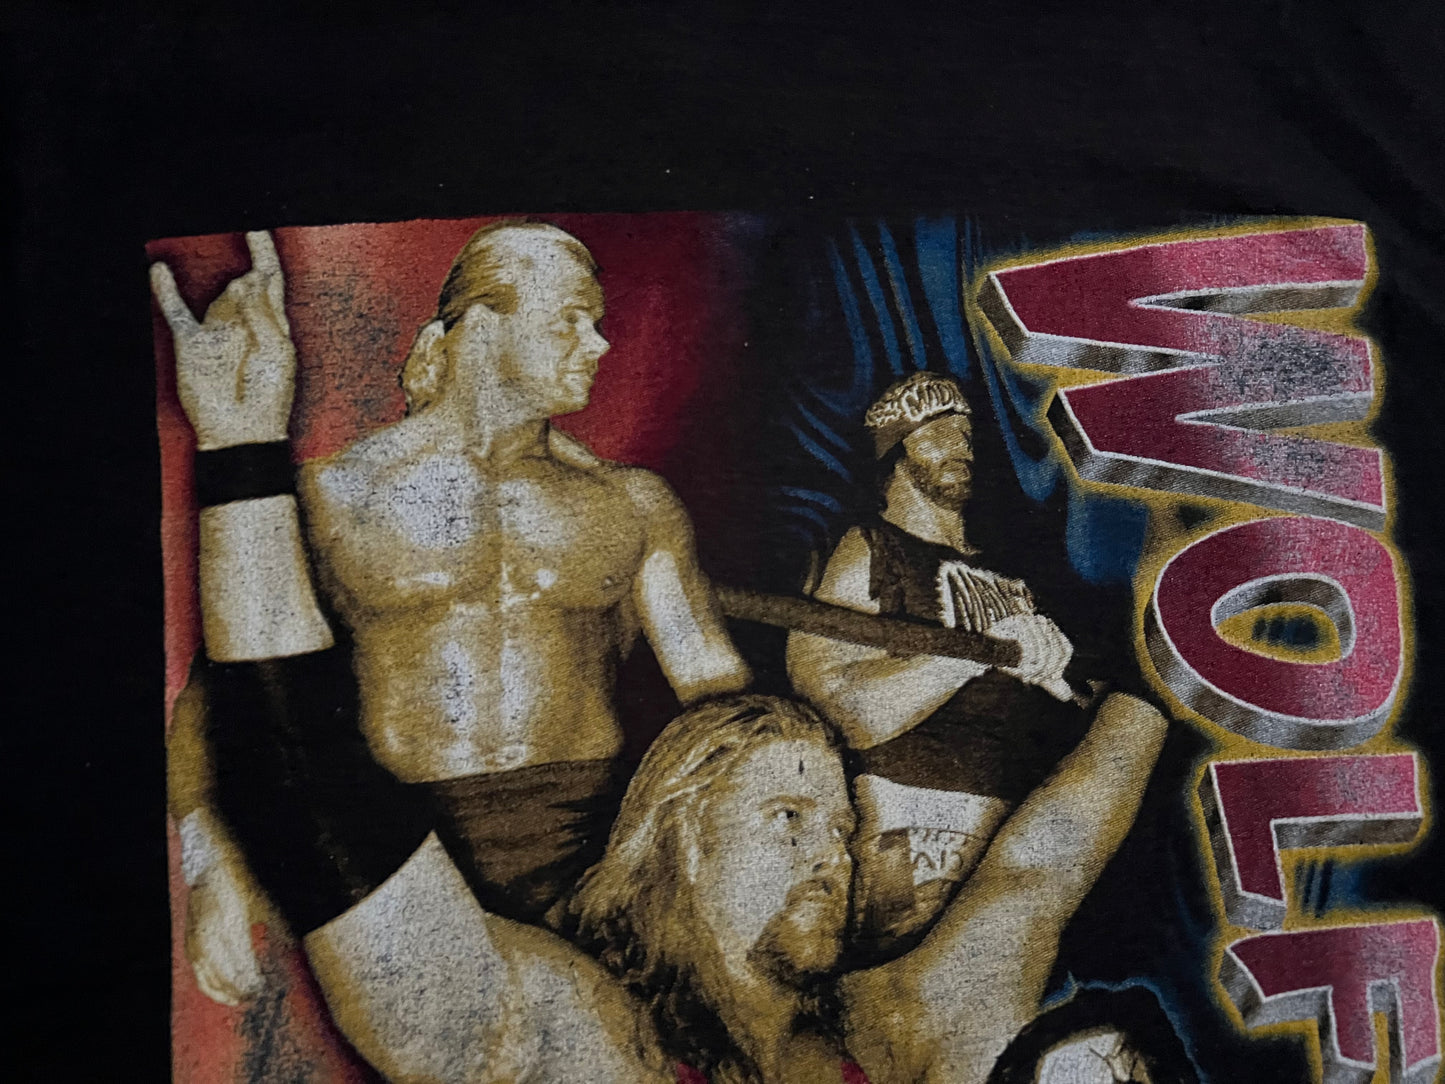 1998 WCW / n.W.o Wolfpac Bootleg shirt featuring Kevin Nash, Sting, Randy Savage, Lex Luger and Curt Hennig